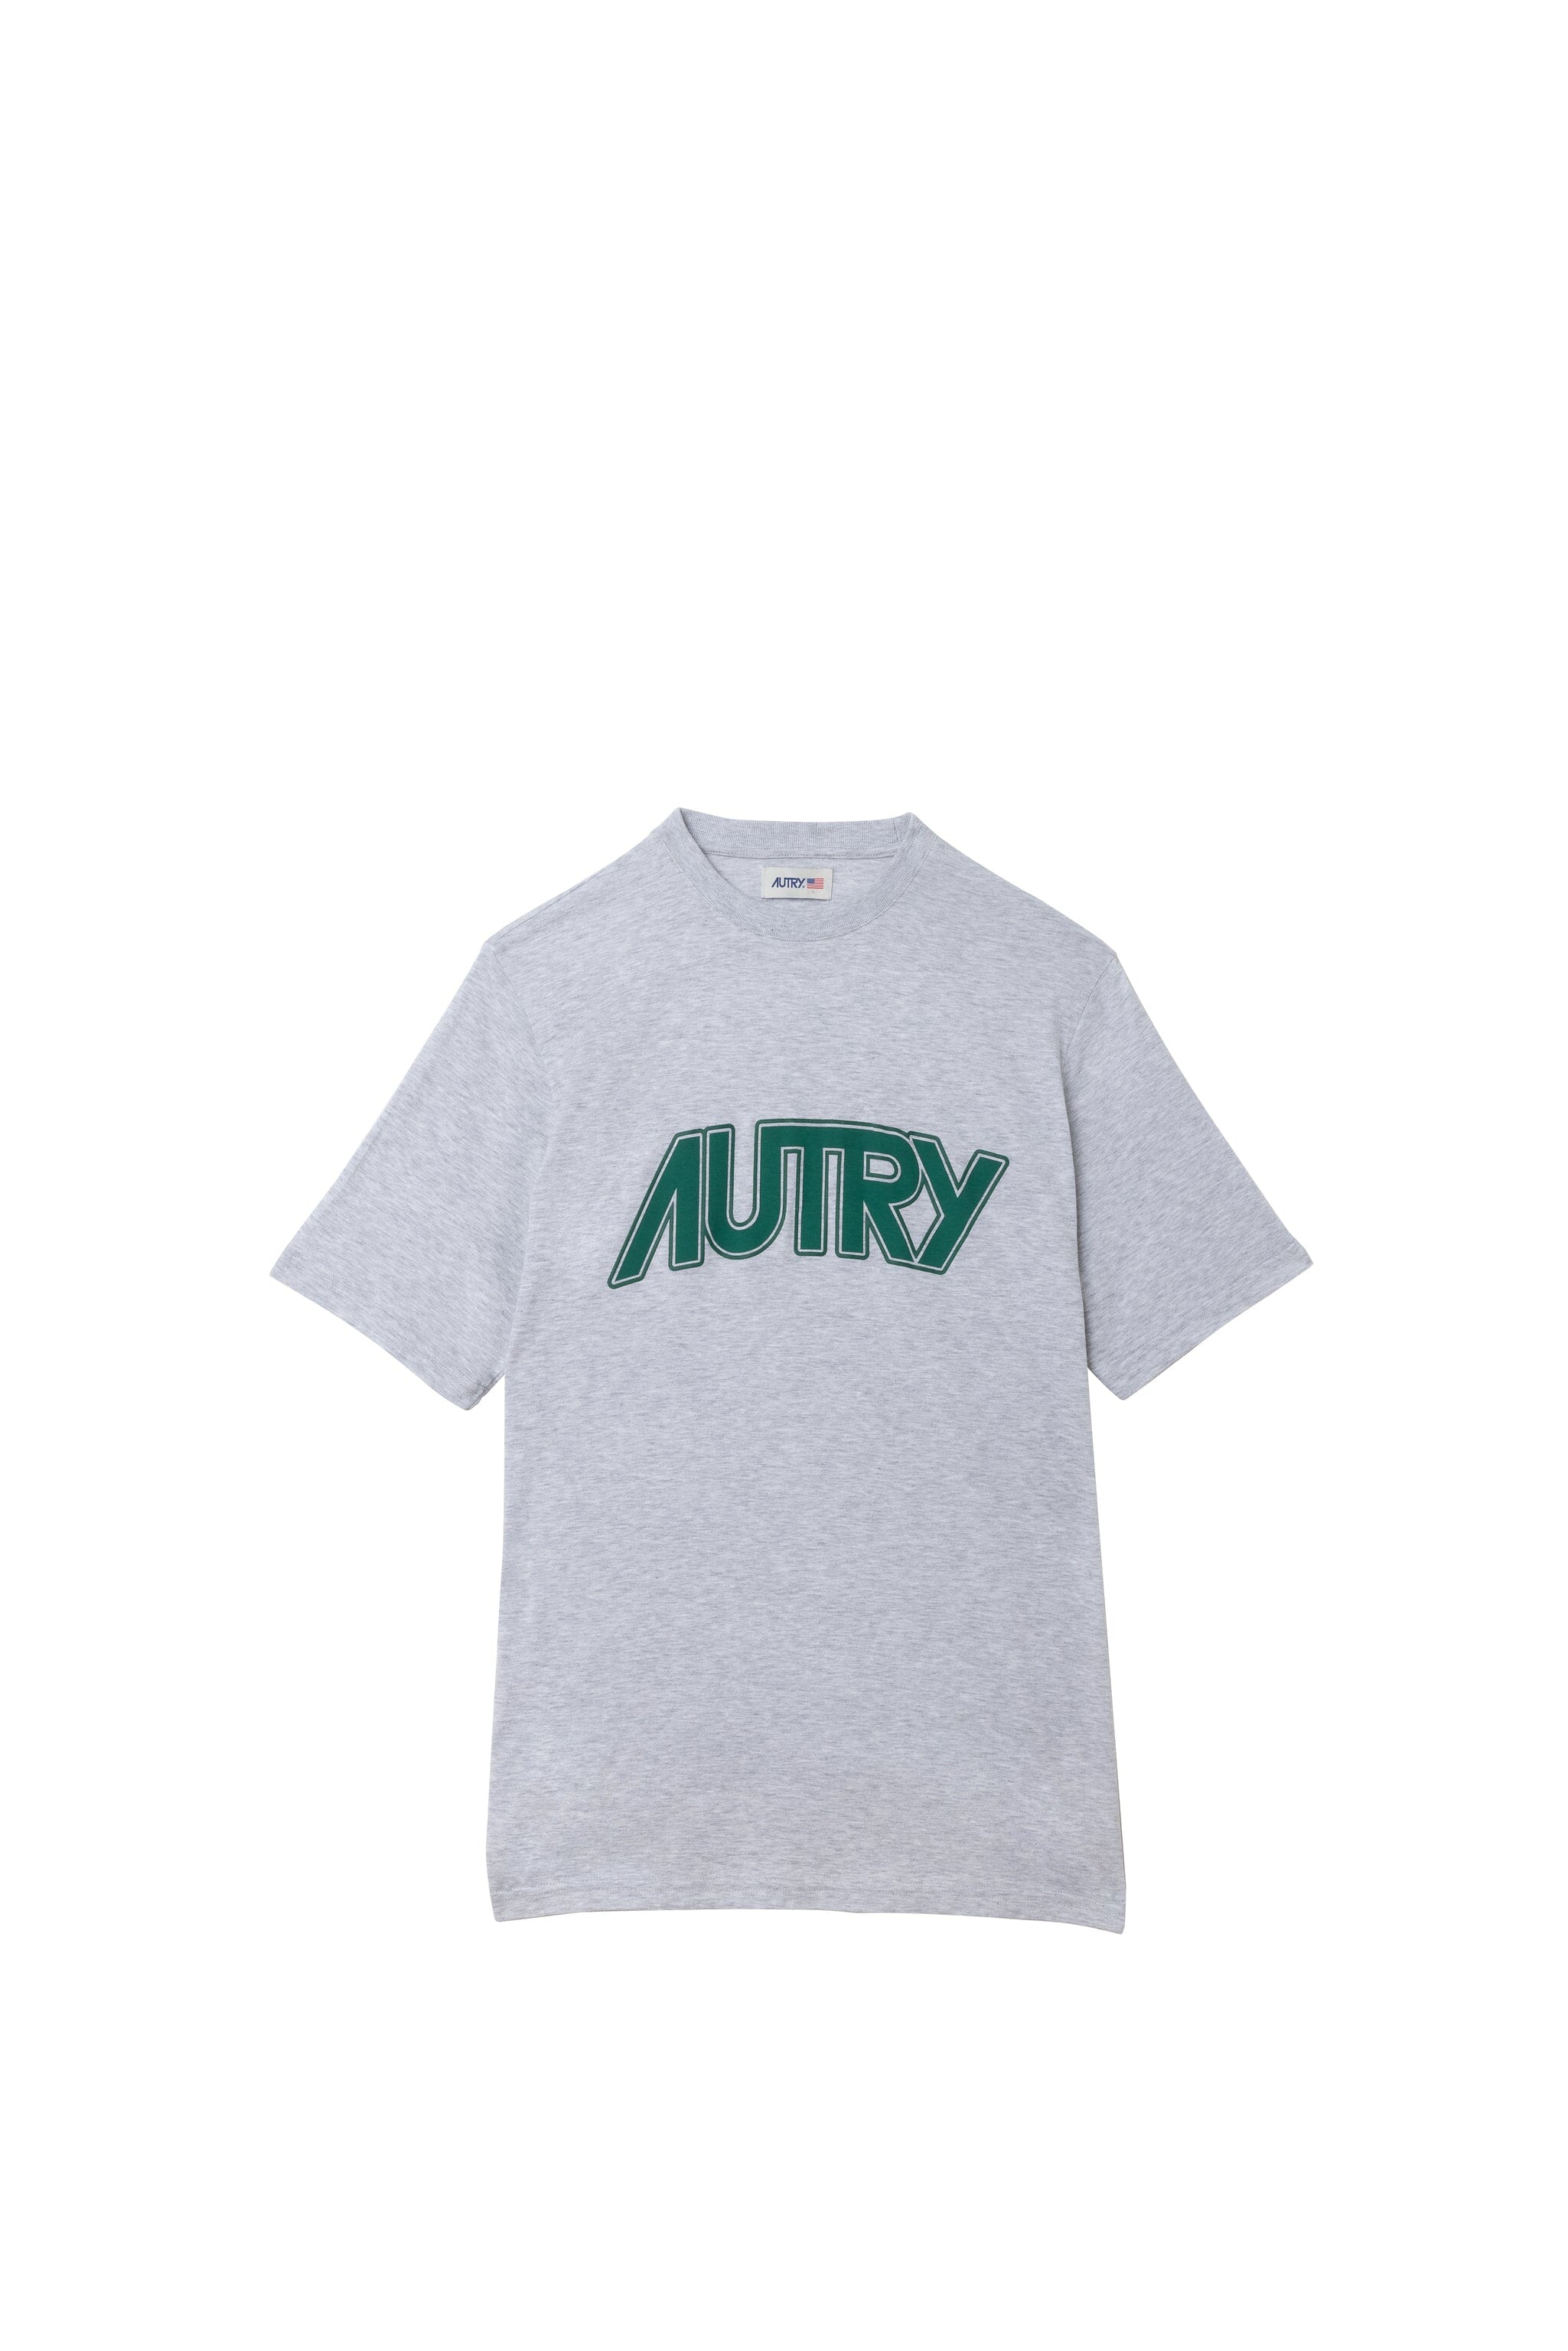 AUTRY - TSPM 504M - Autry T-Shirt - Melange Scarpe Uomo AUTRY - Collezione uomo 